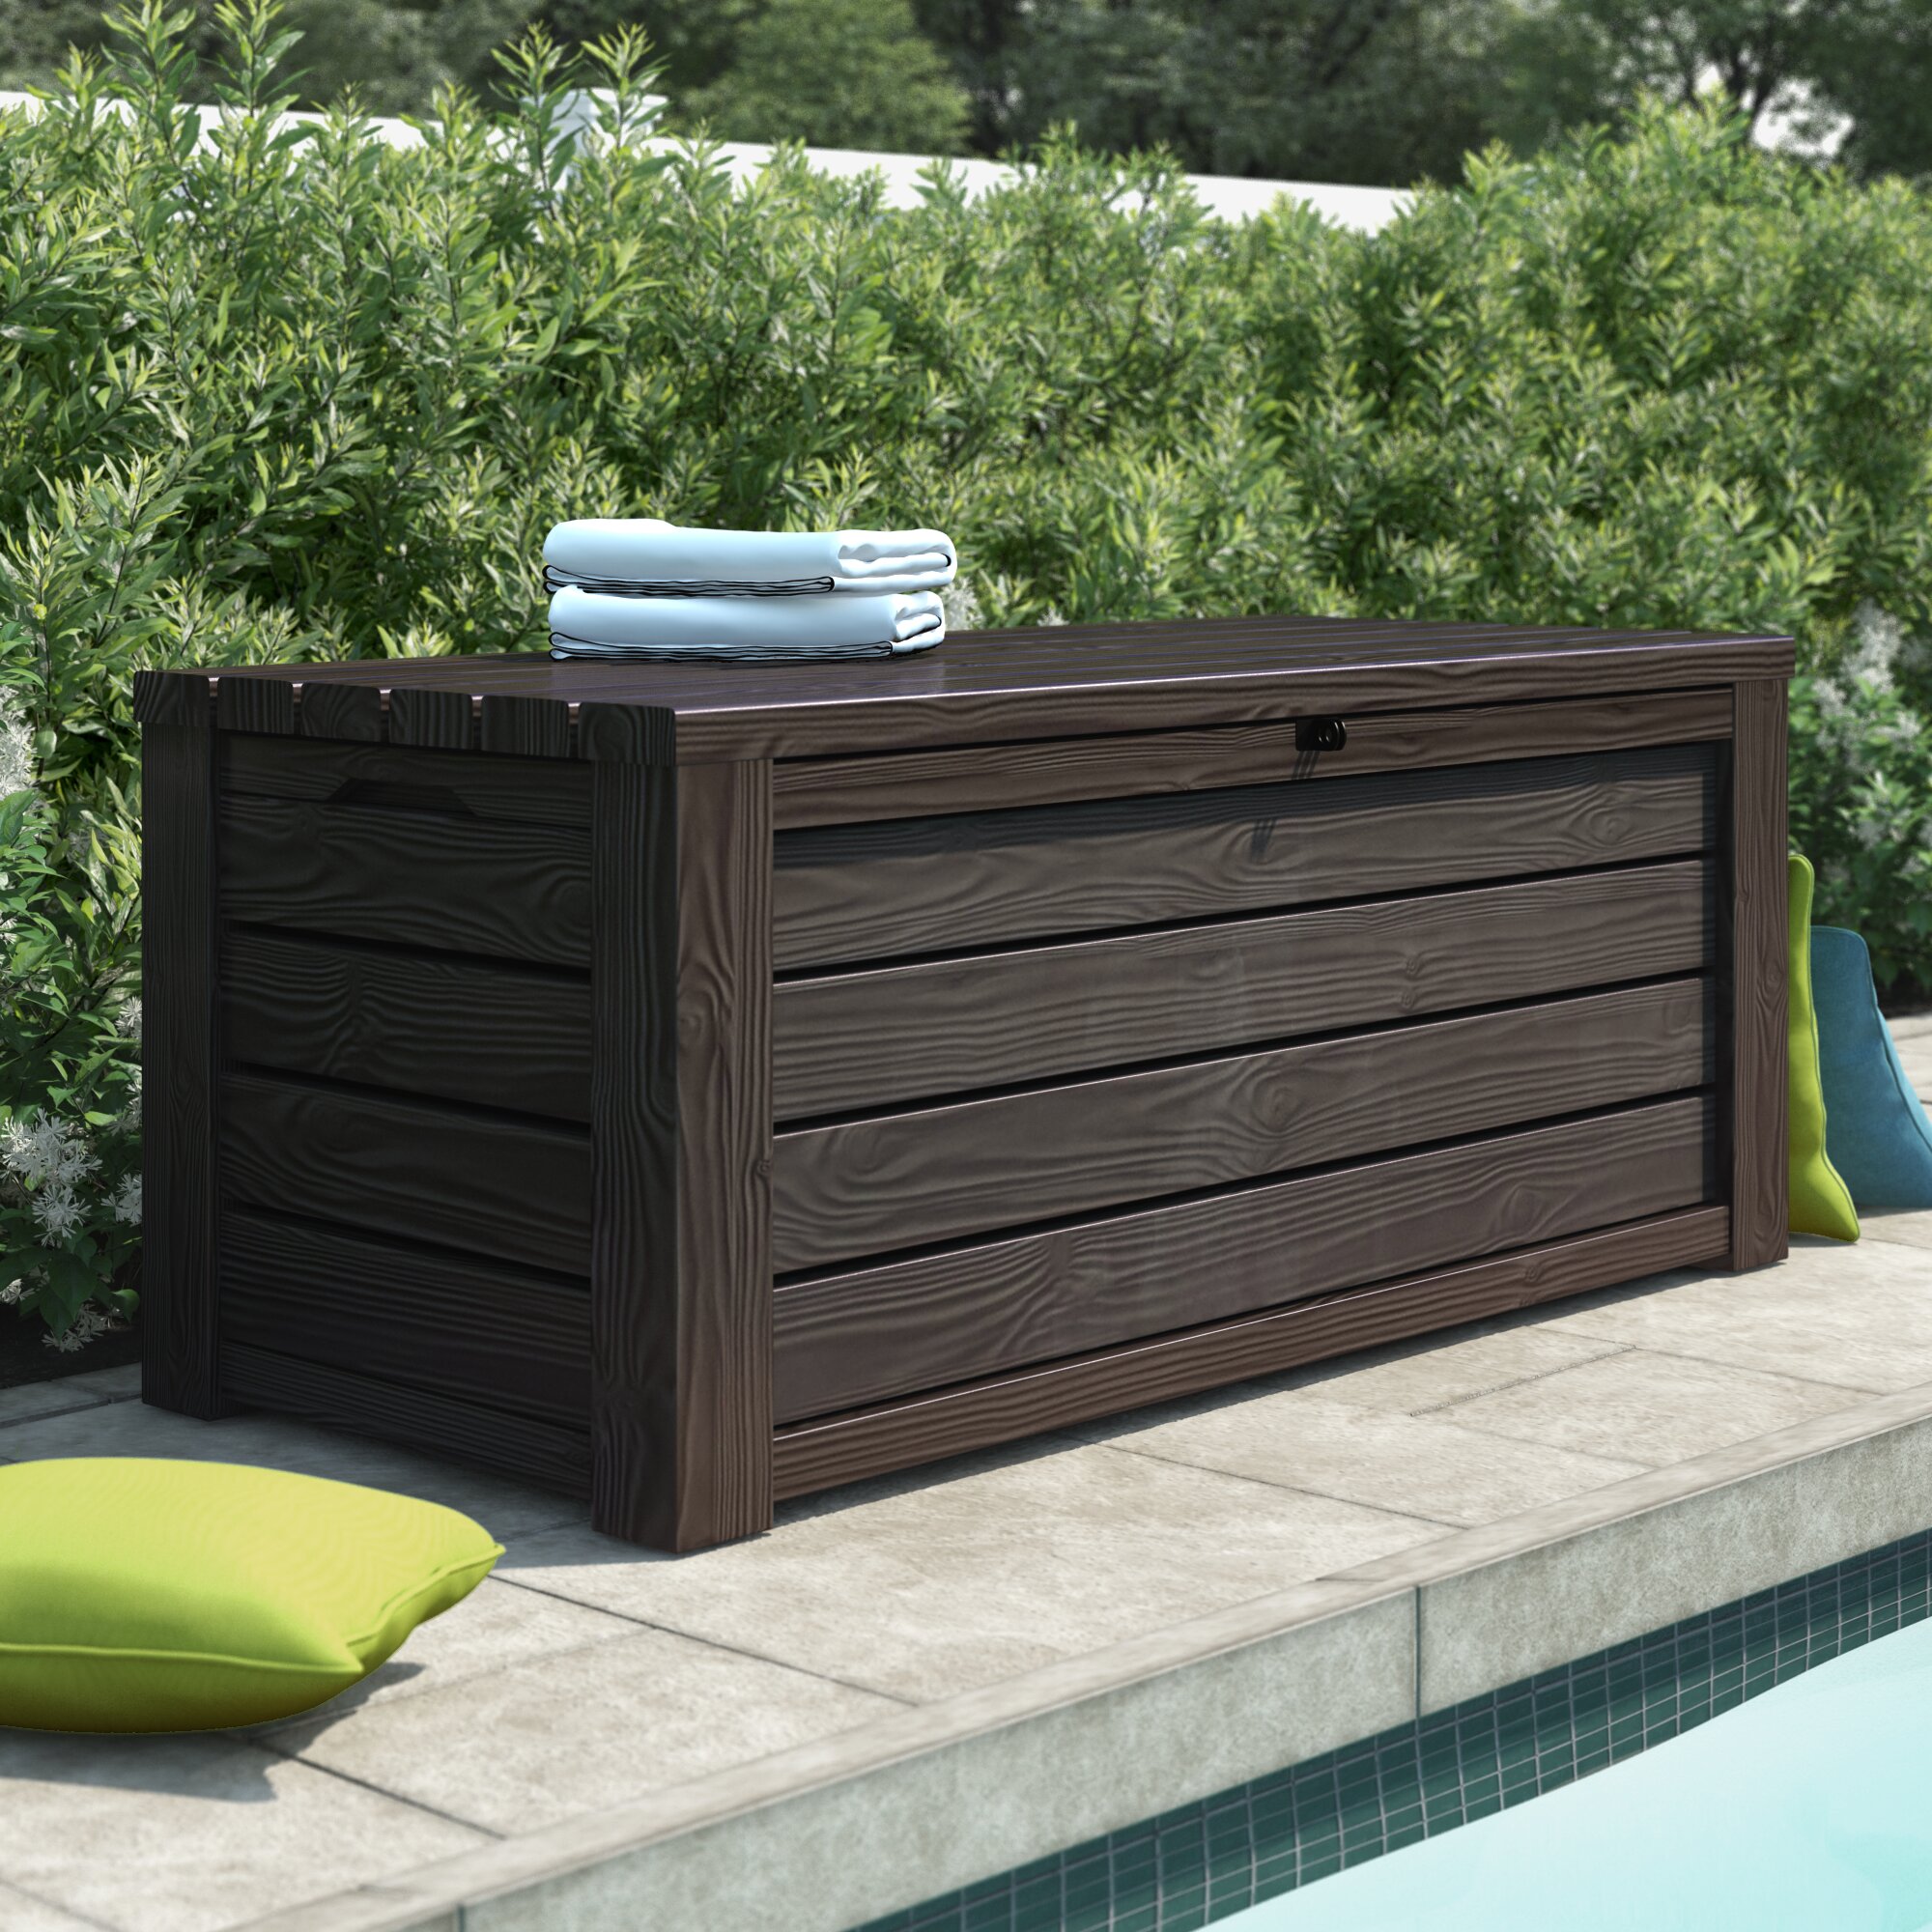 Brown Outdoor Storage Box， 22 Gallon Outdoor Resin Wicker Deck Storage Box with Seat 